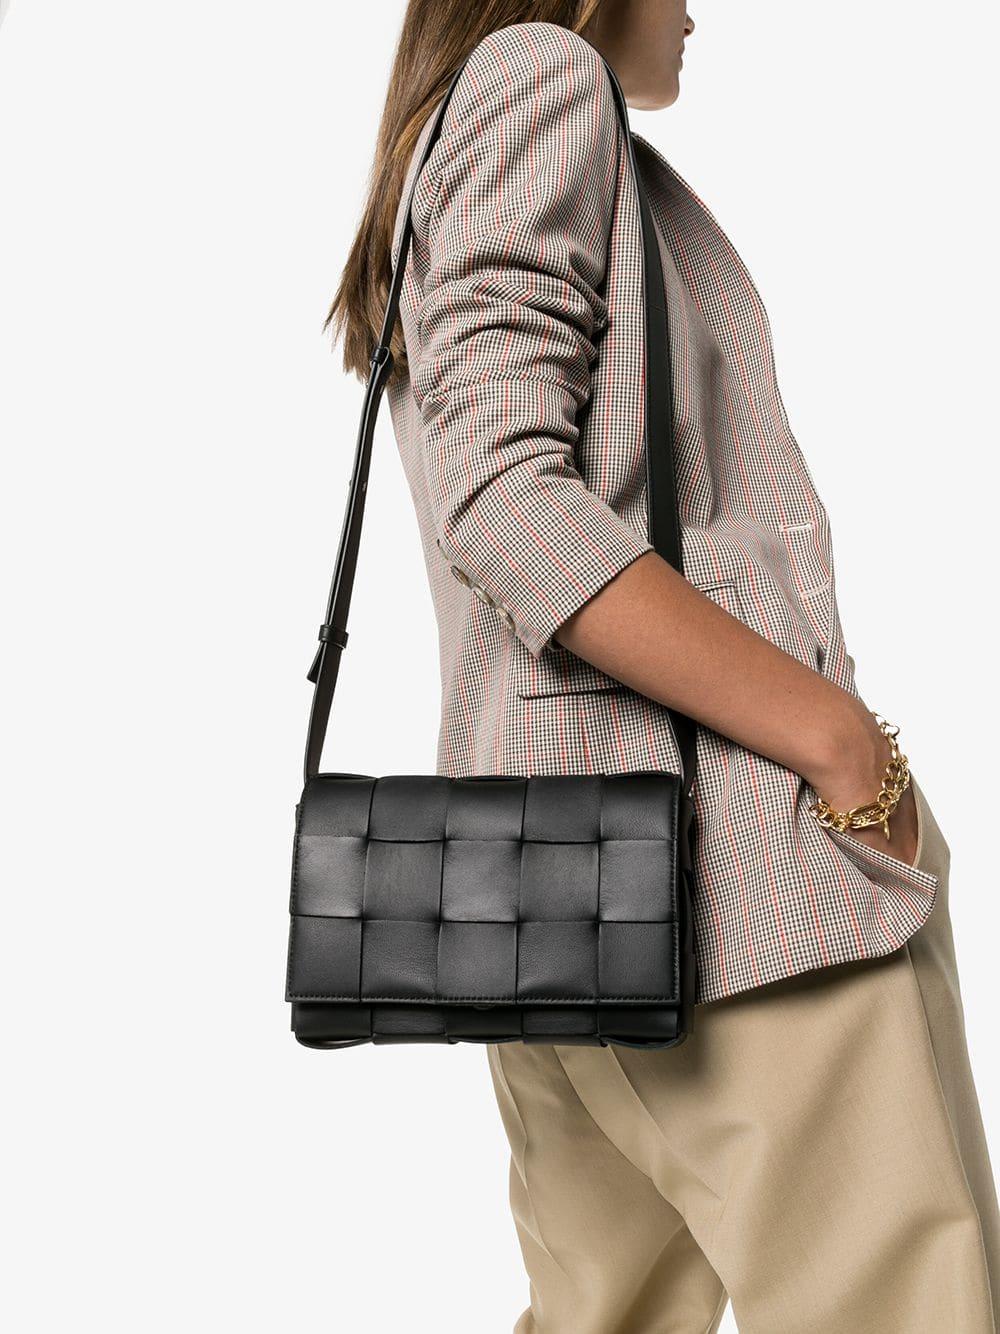 Bottega Veneta Black Maxi Intreccio Shoulder Bag in Black - Lyst